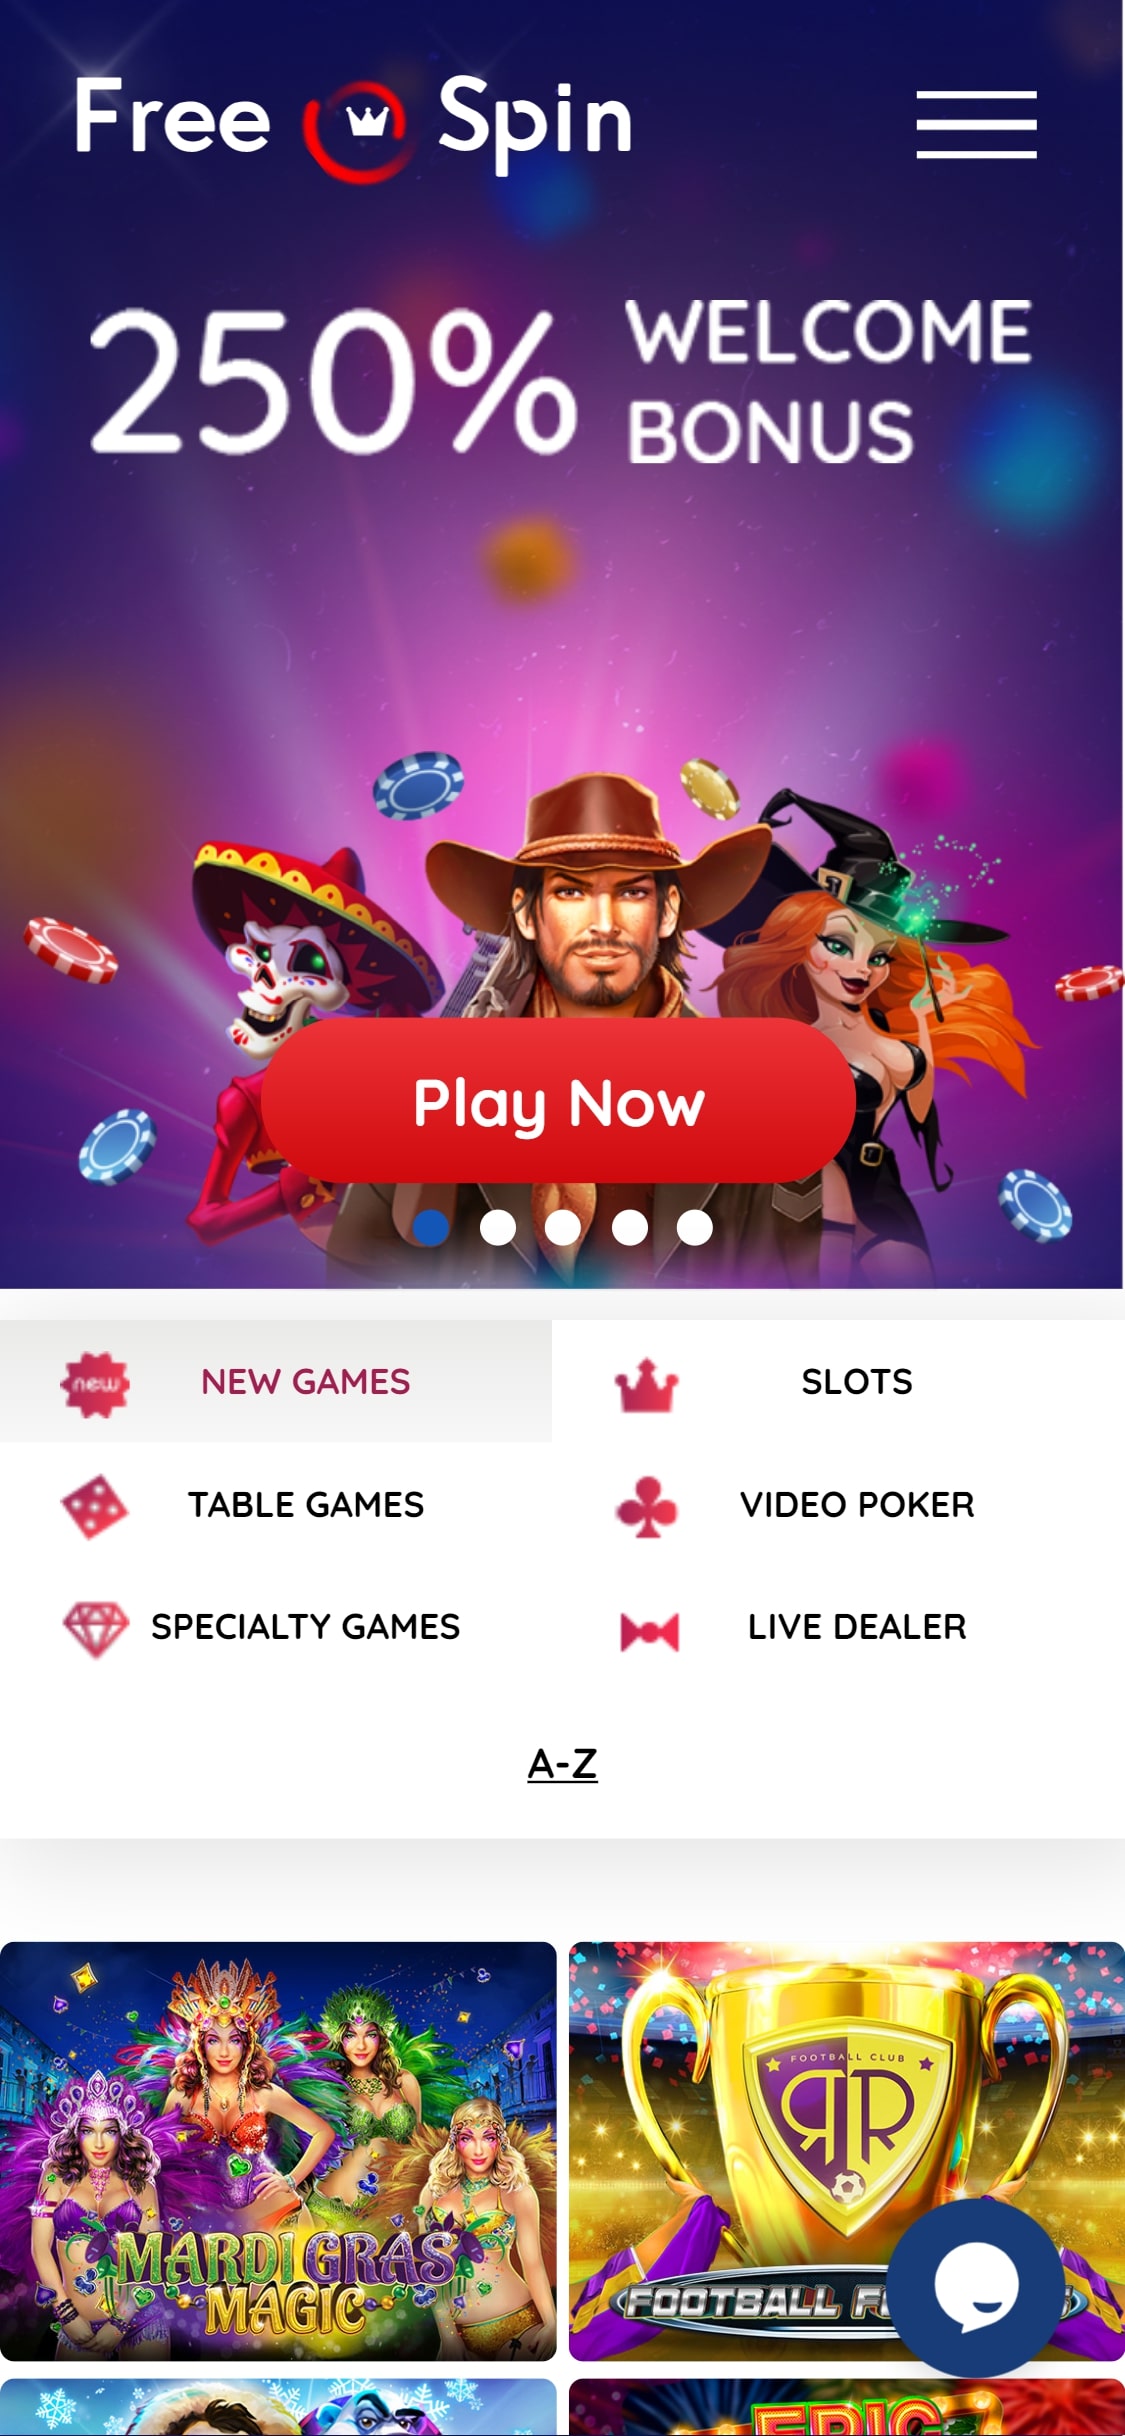 Freespin Casino Mobile Review